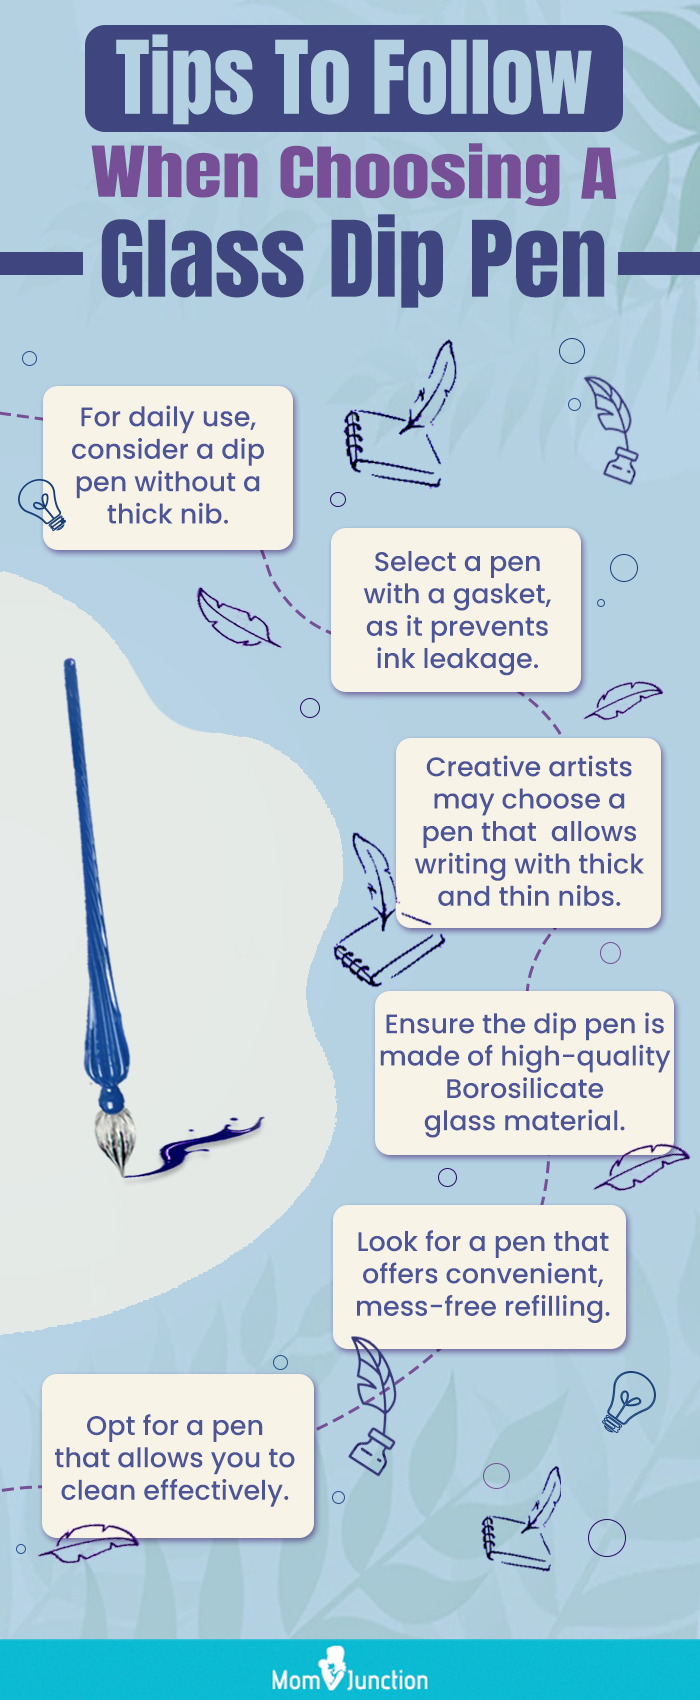 Tips To Follow When Choosing A Glass Dip Pen (infographic)